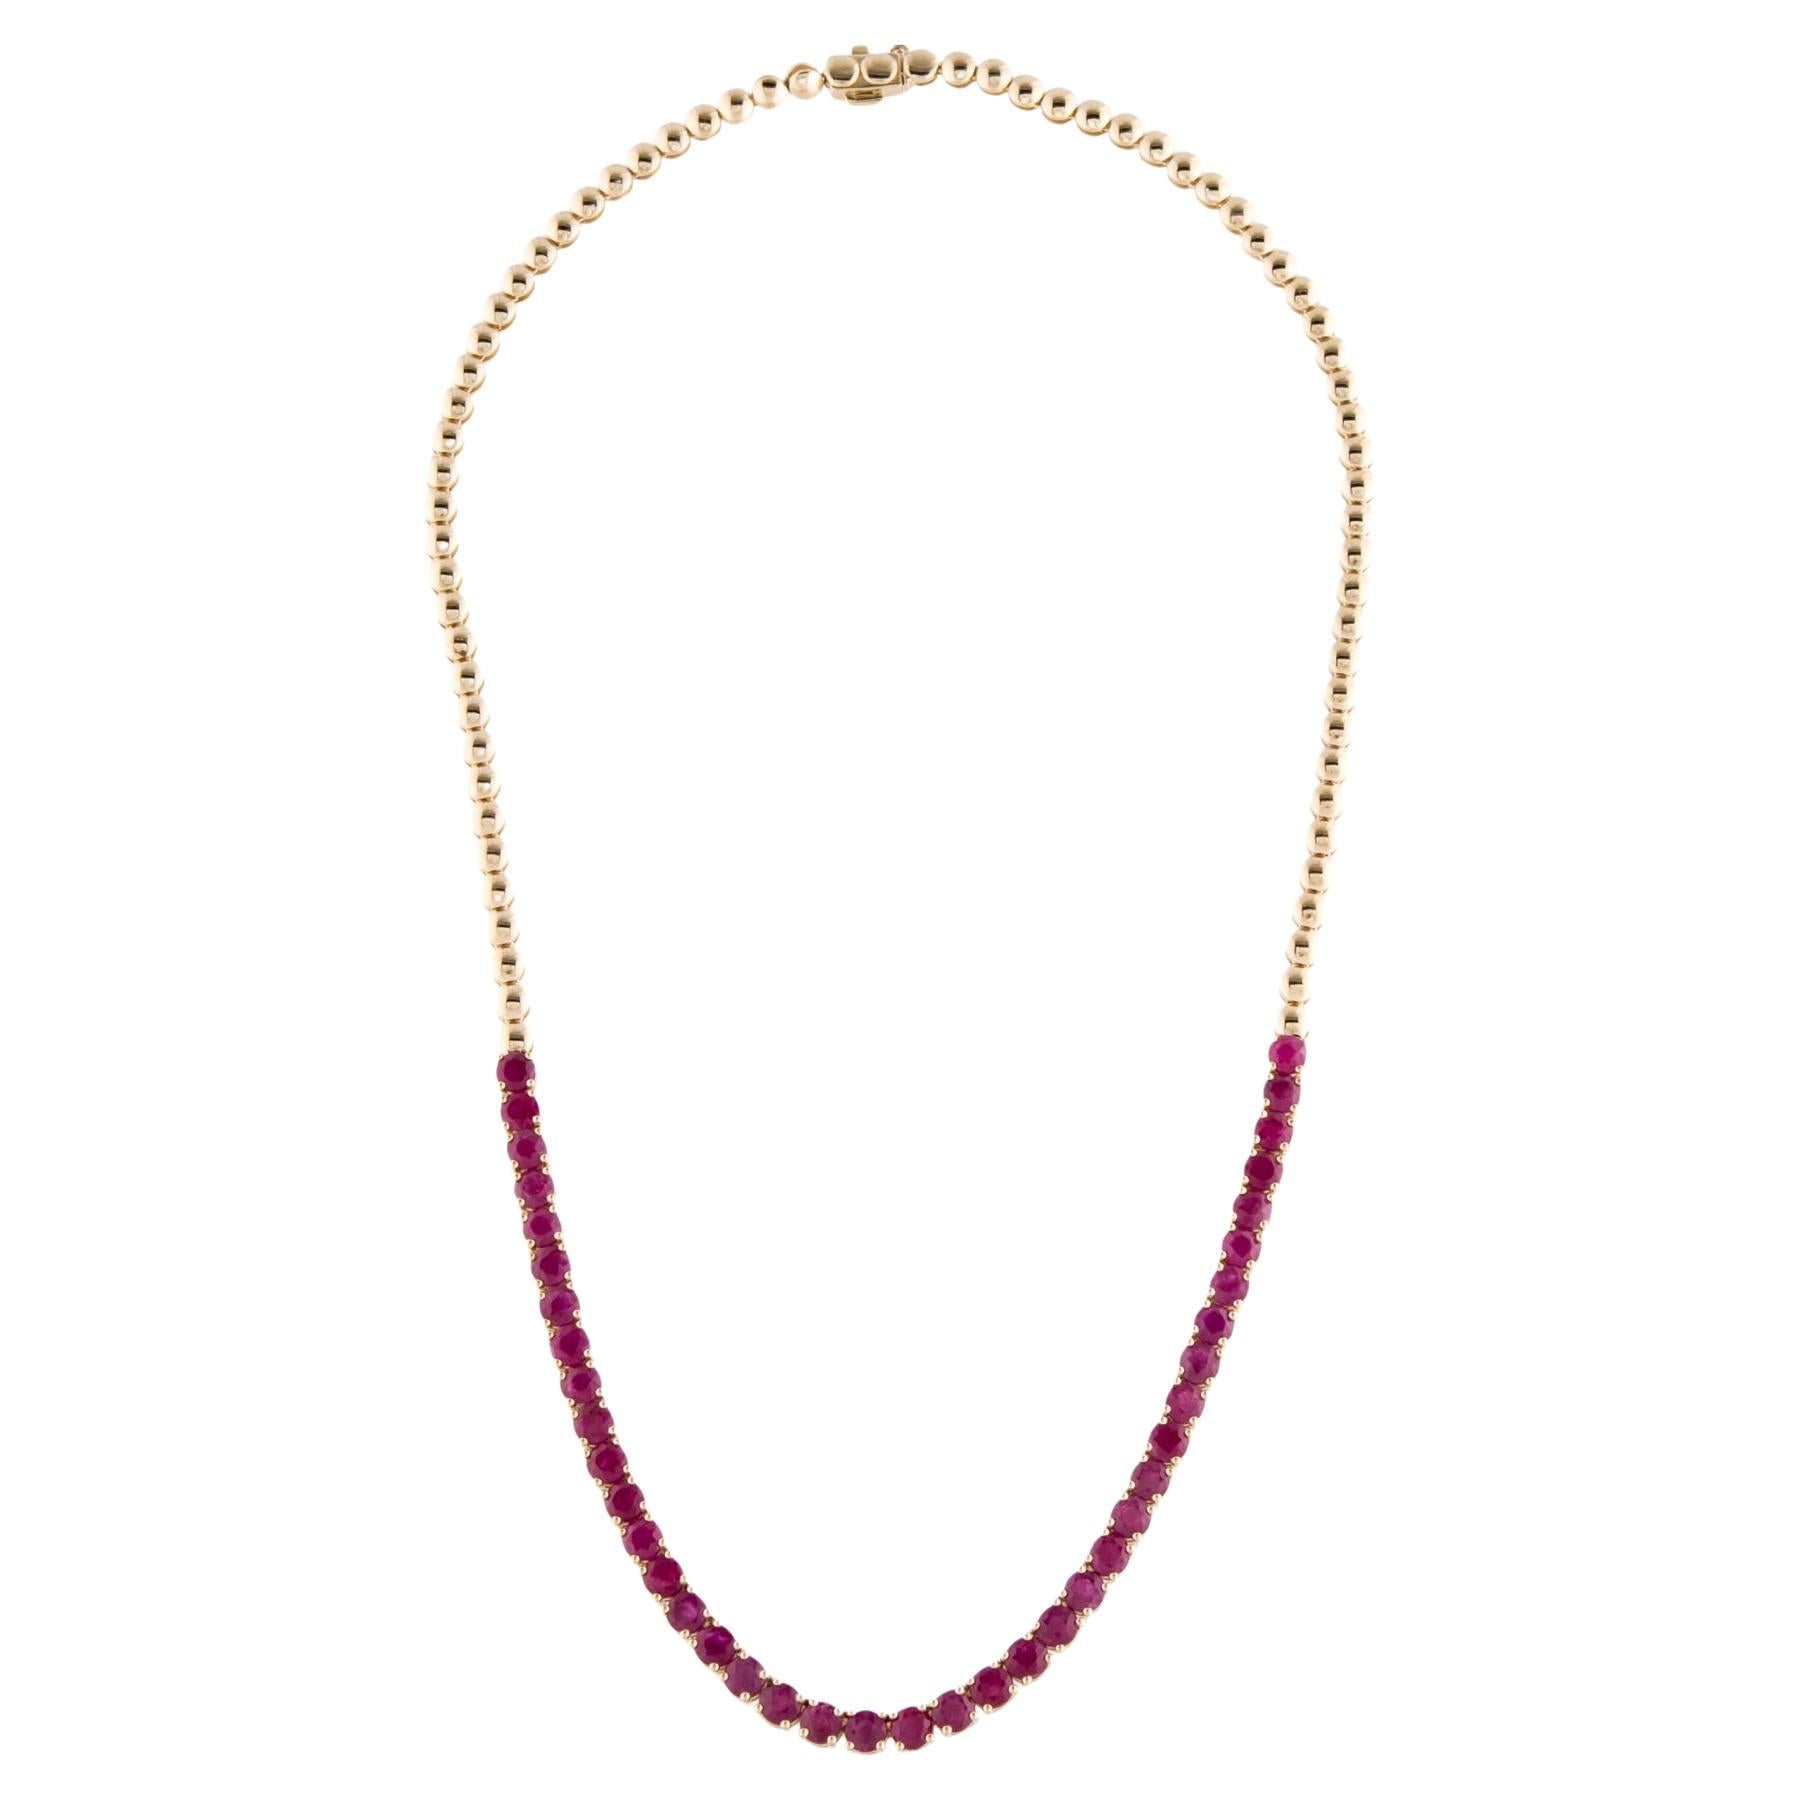 14K Ruby Chain Necklace 15.92ctw - Luxurious Jewelry Piece for Timeless Elegance (Collier de chaîne en rubis 14K 15.92ctw) - Elegance intemporelle